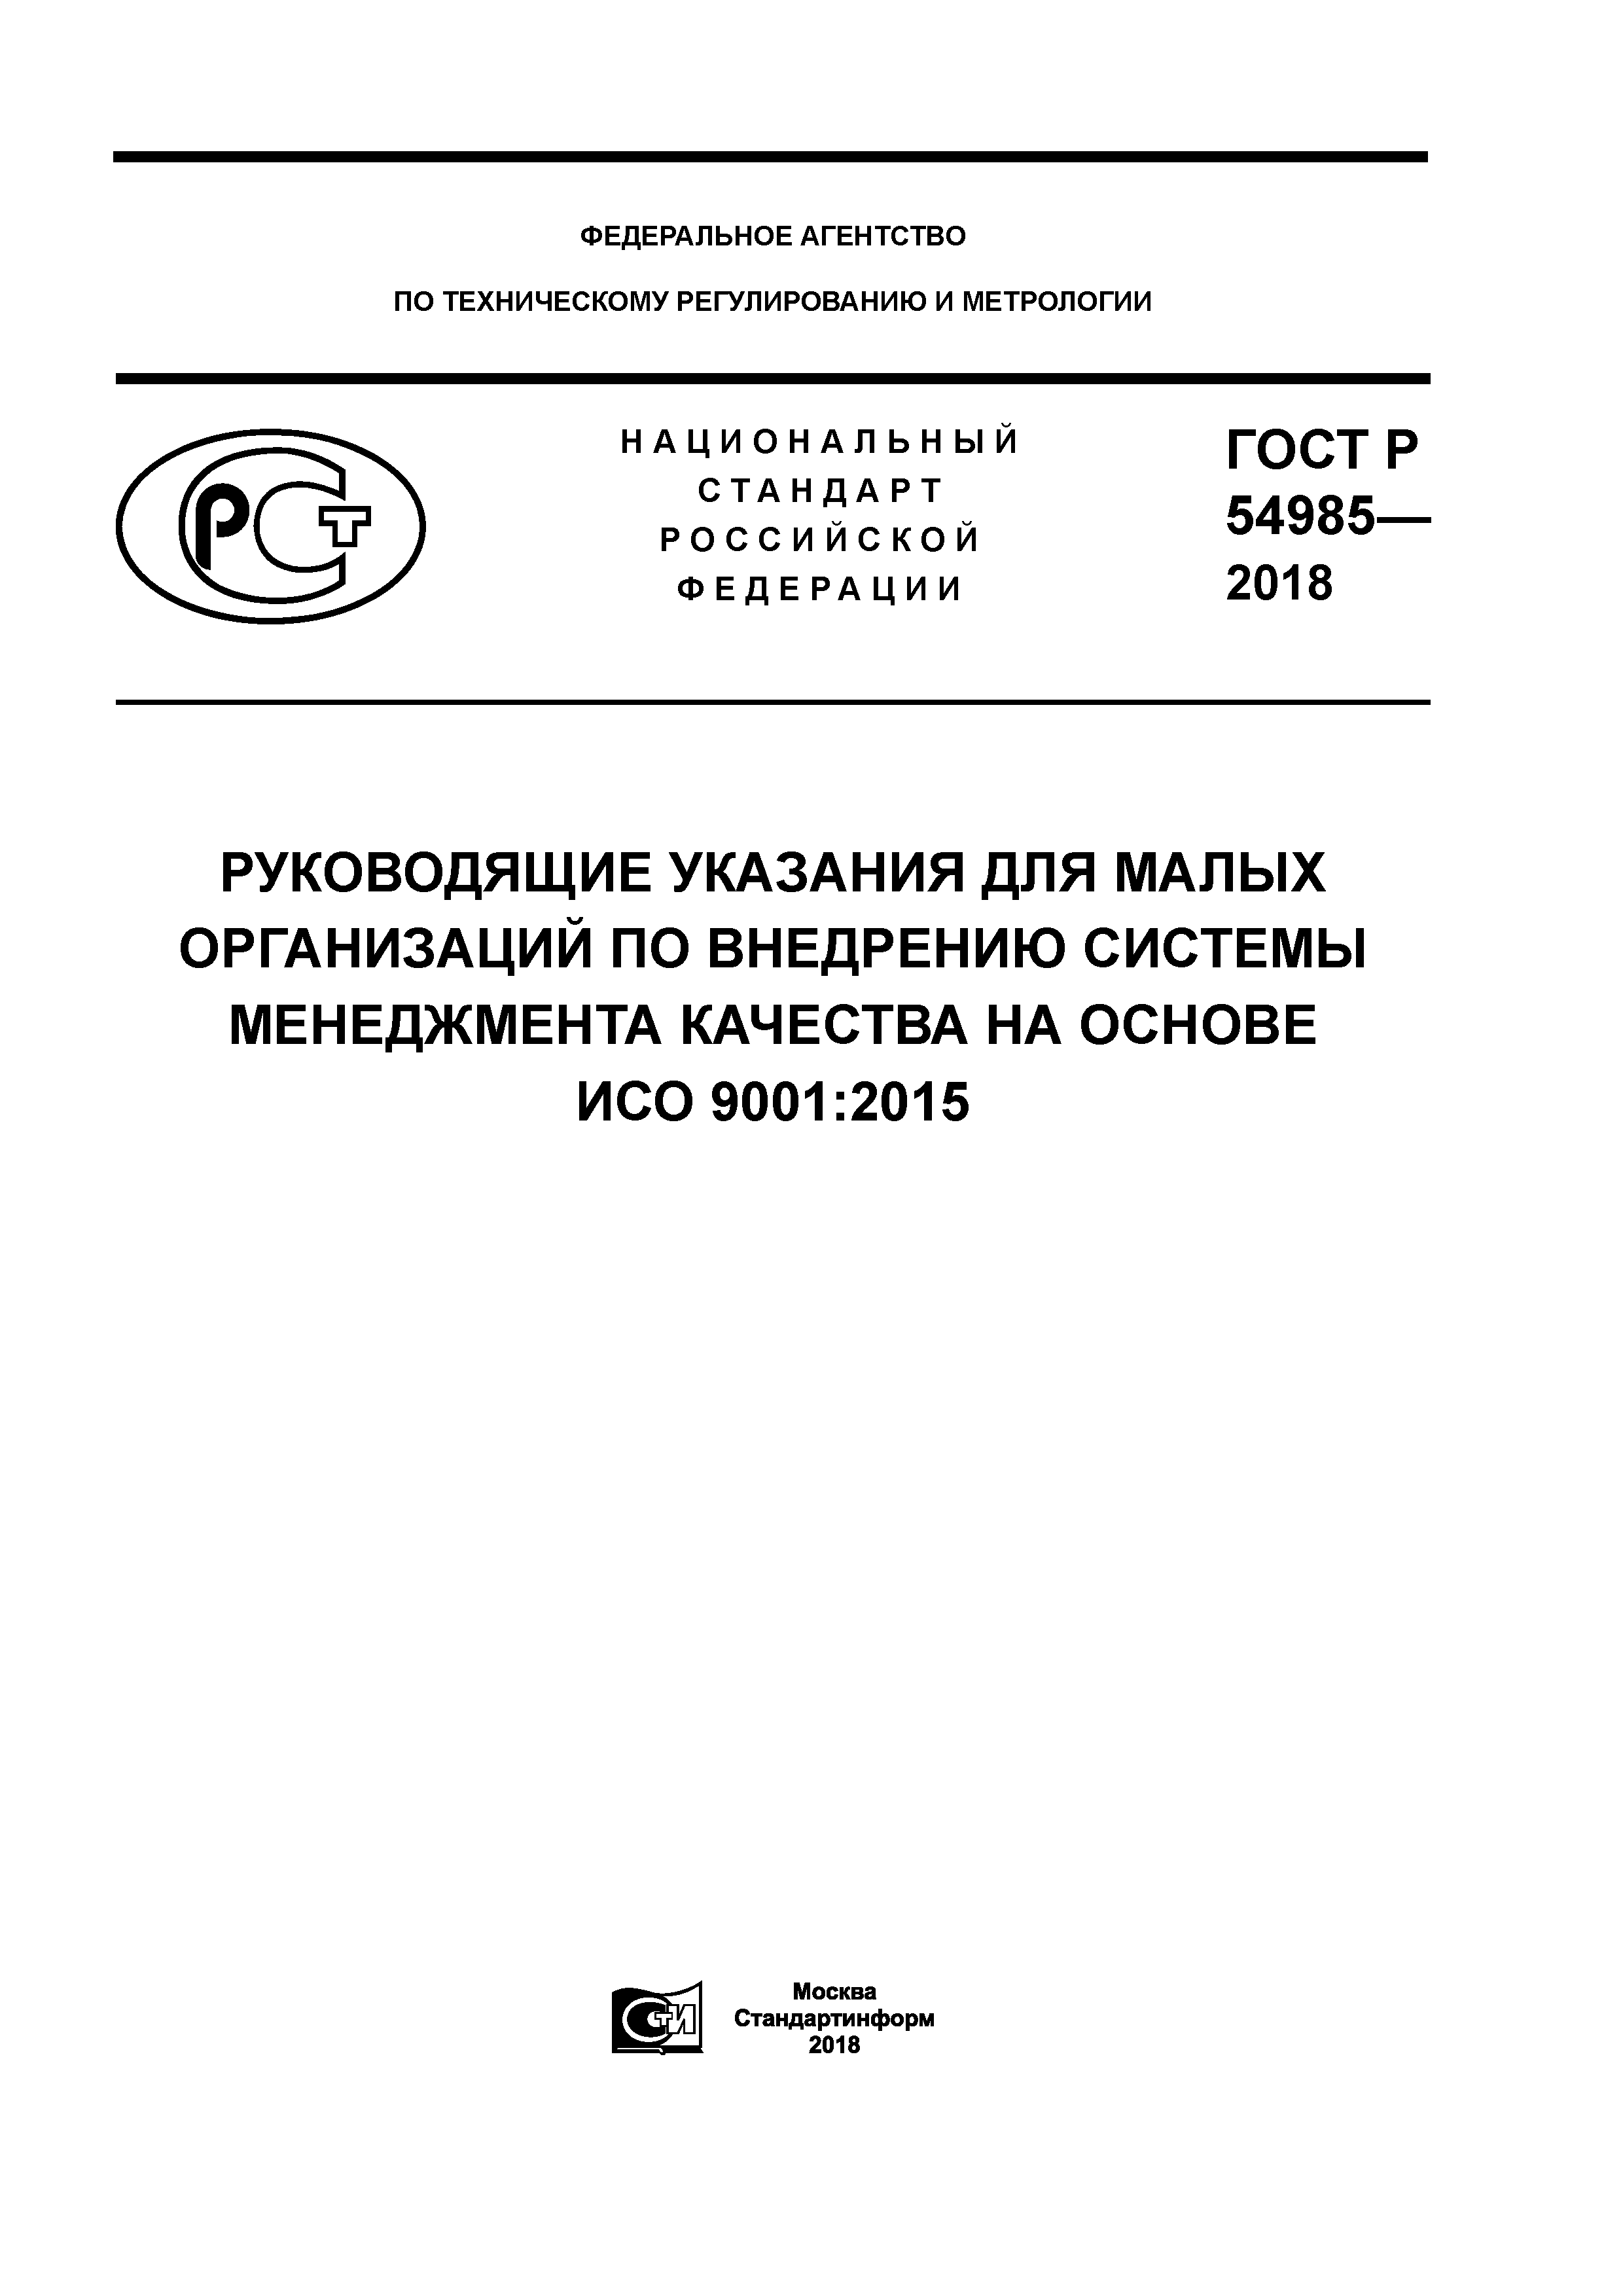 ГОСТ Р 54985-2018